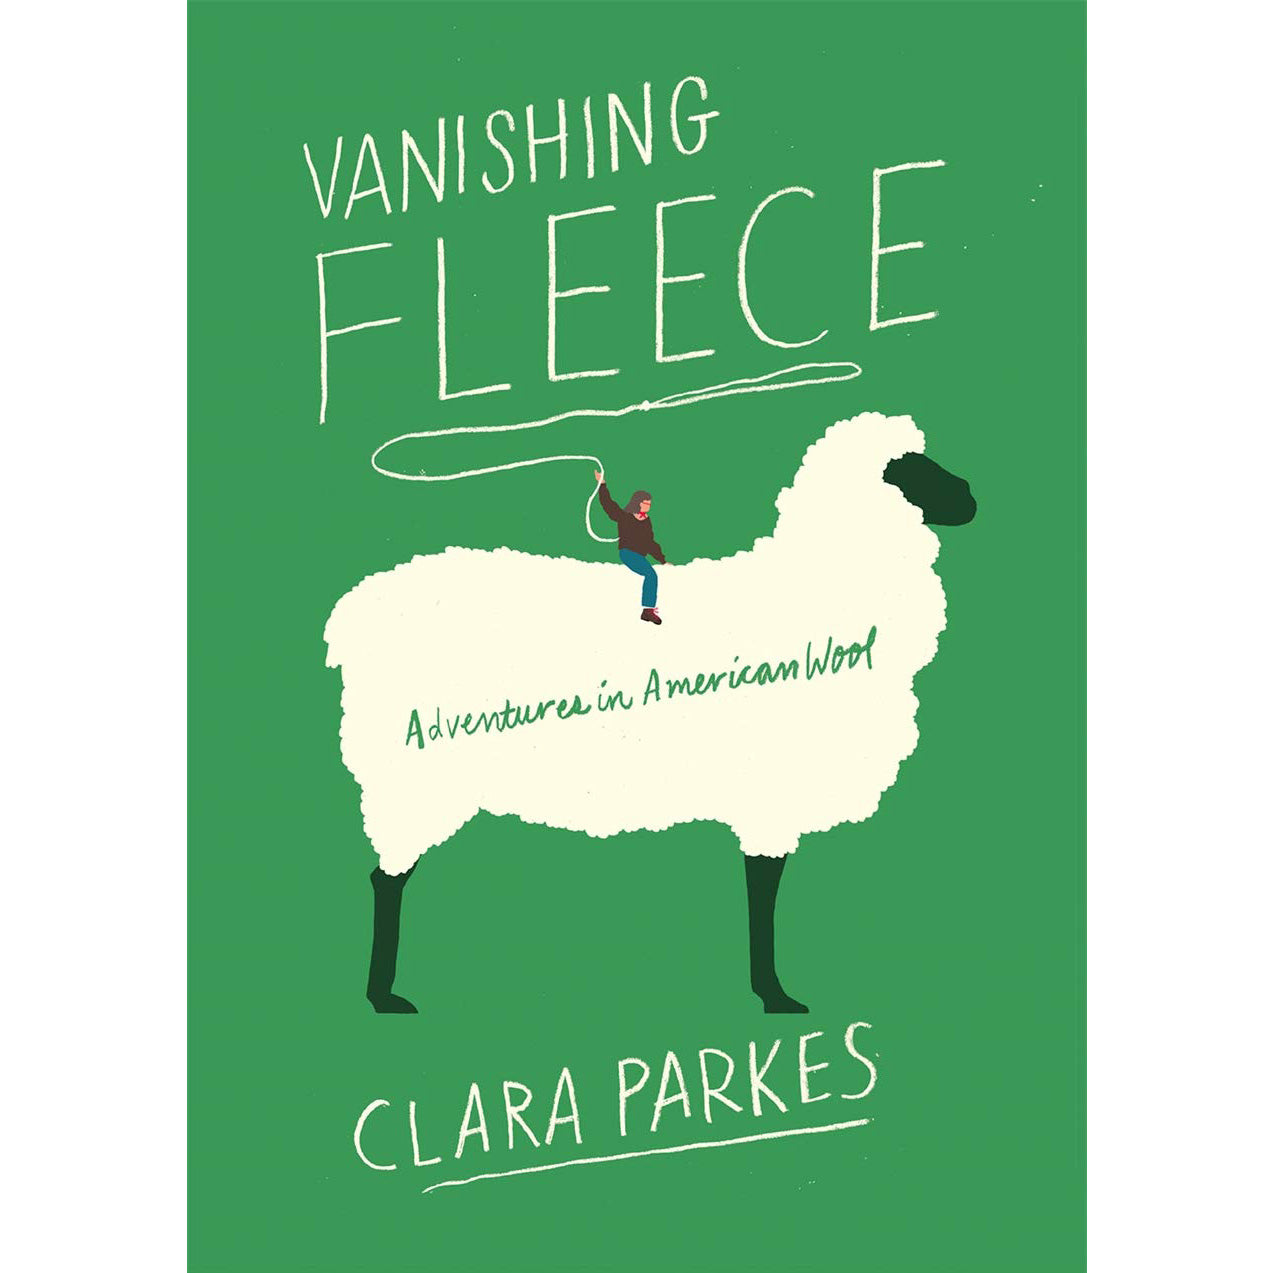 Vanishing Fleece (Clara Parkes)